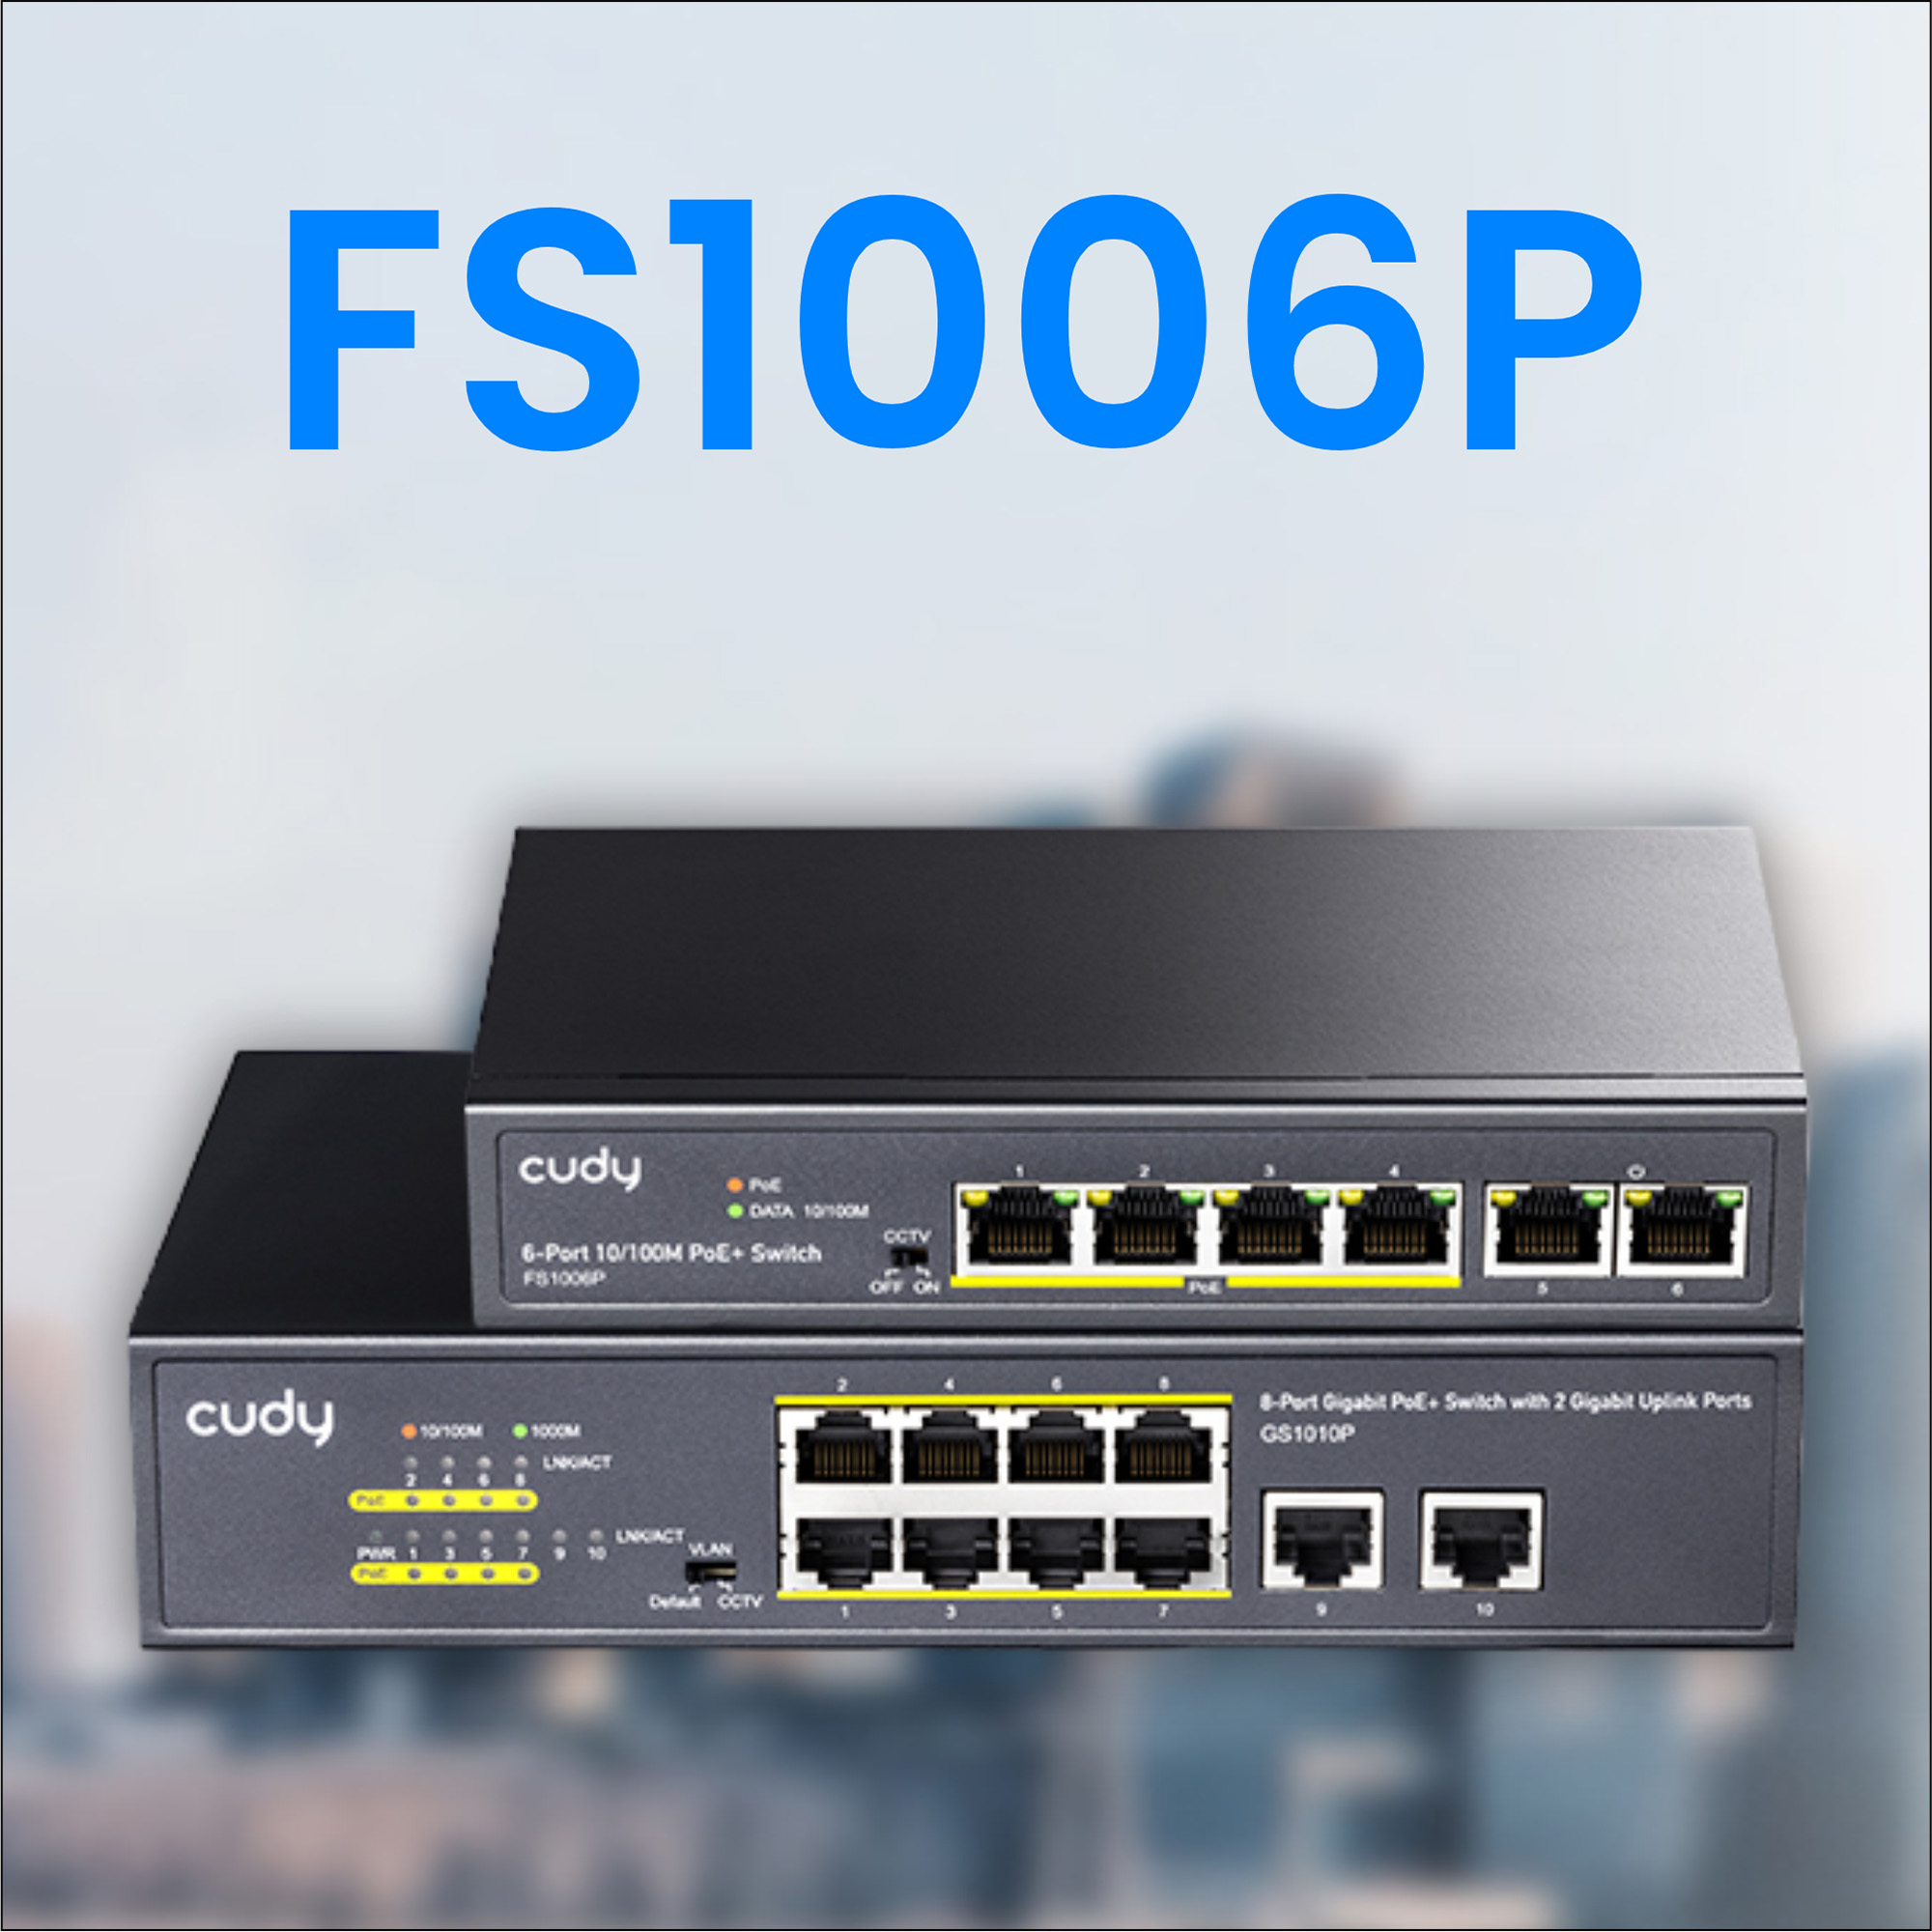 FS1006P